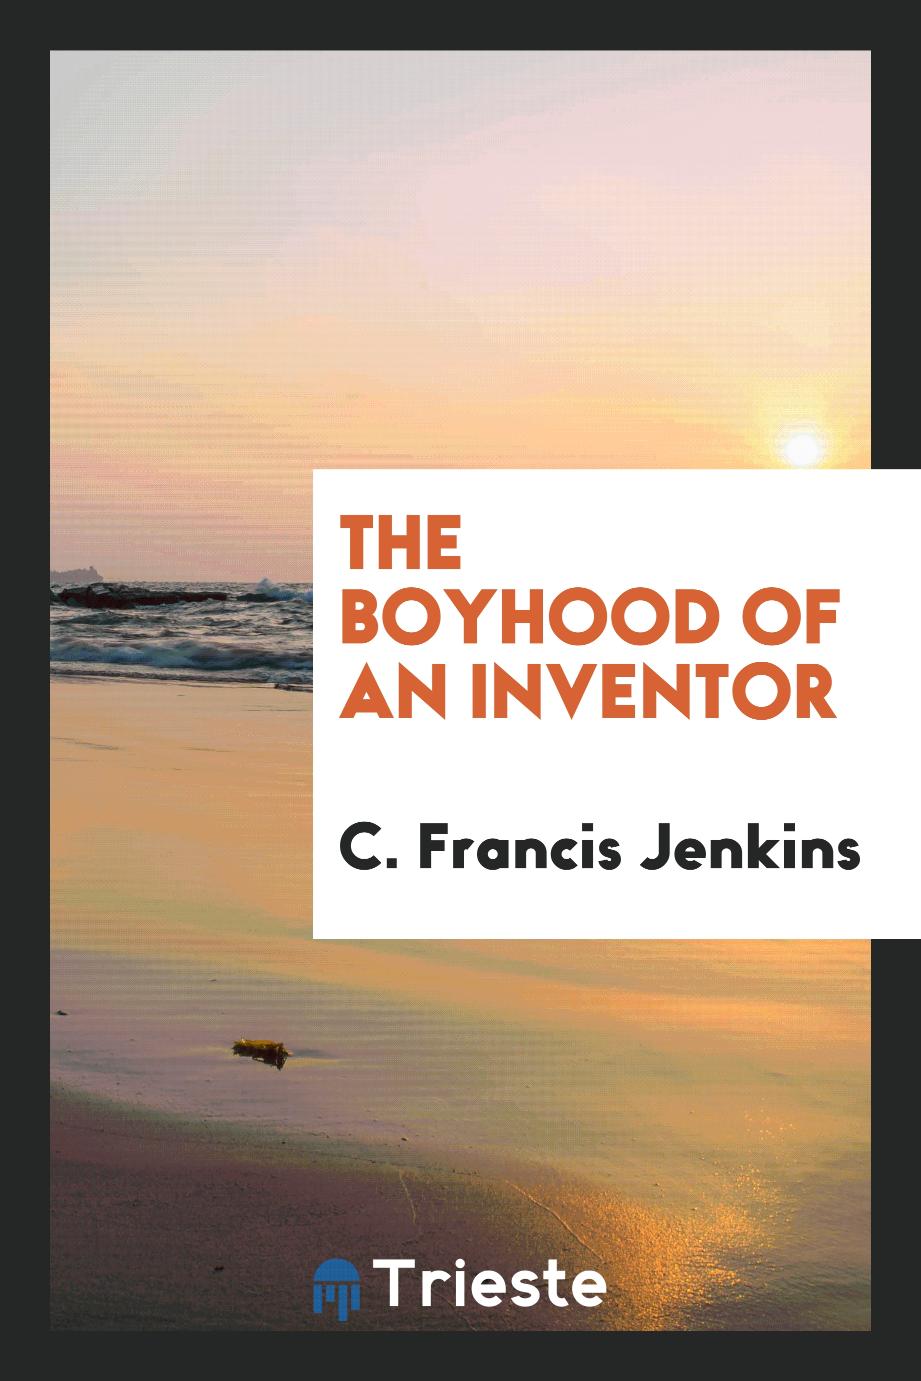 The Boyhood of an Inventor